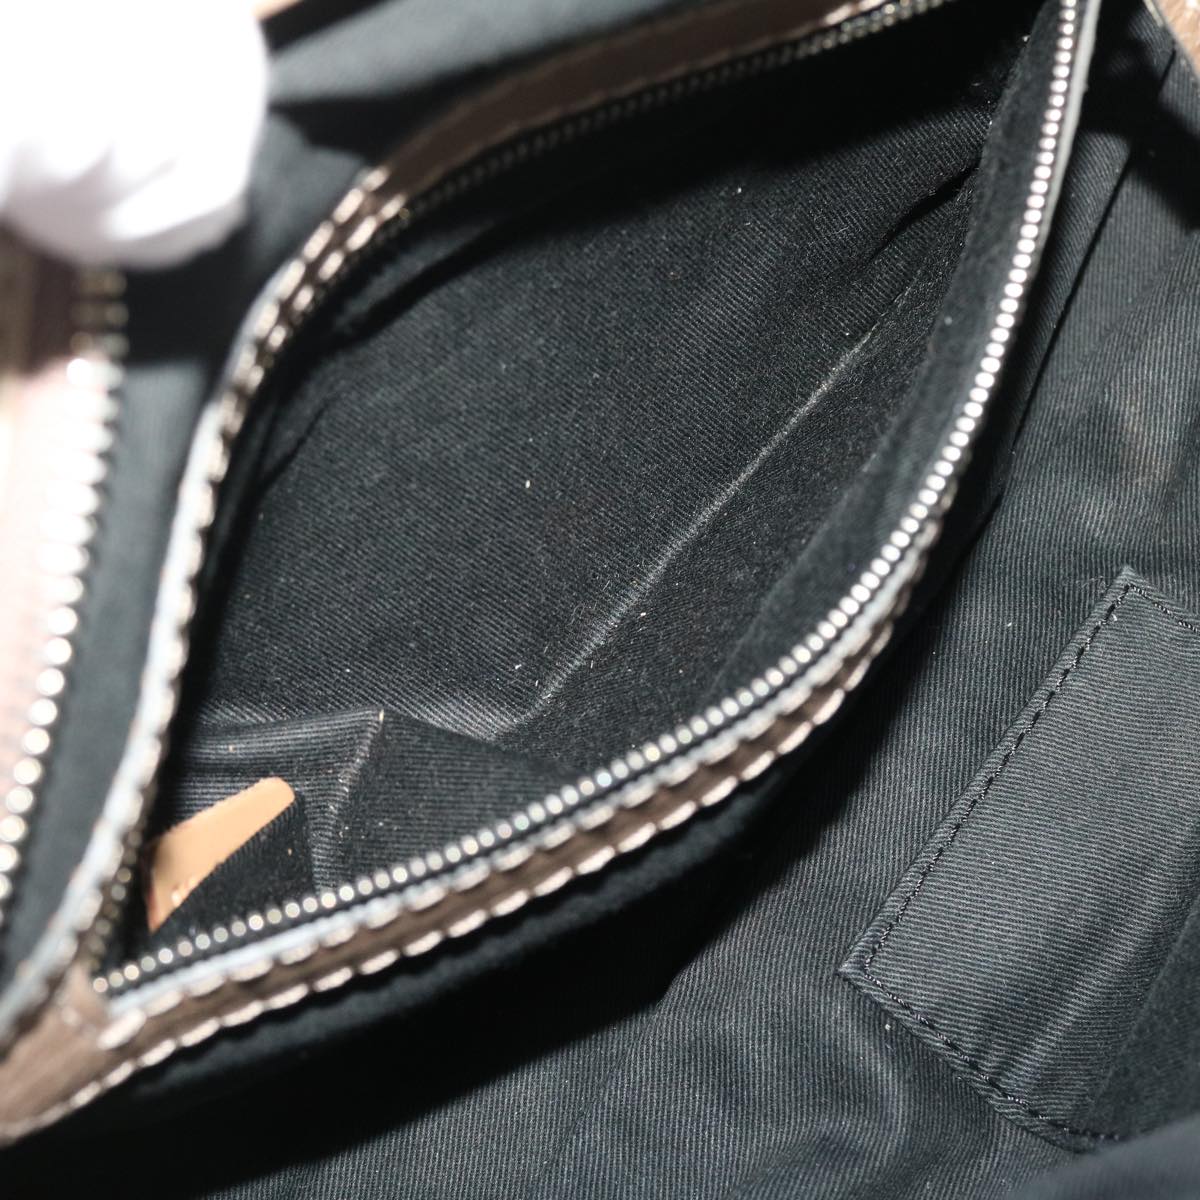 Chloe Paddington Hand Bag Leather Beige Auth 45609